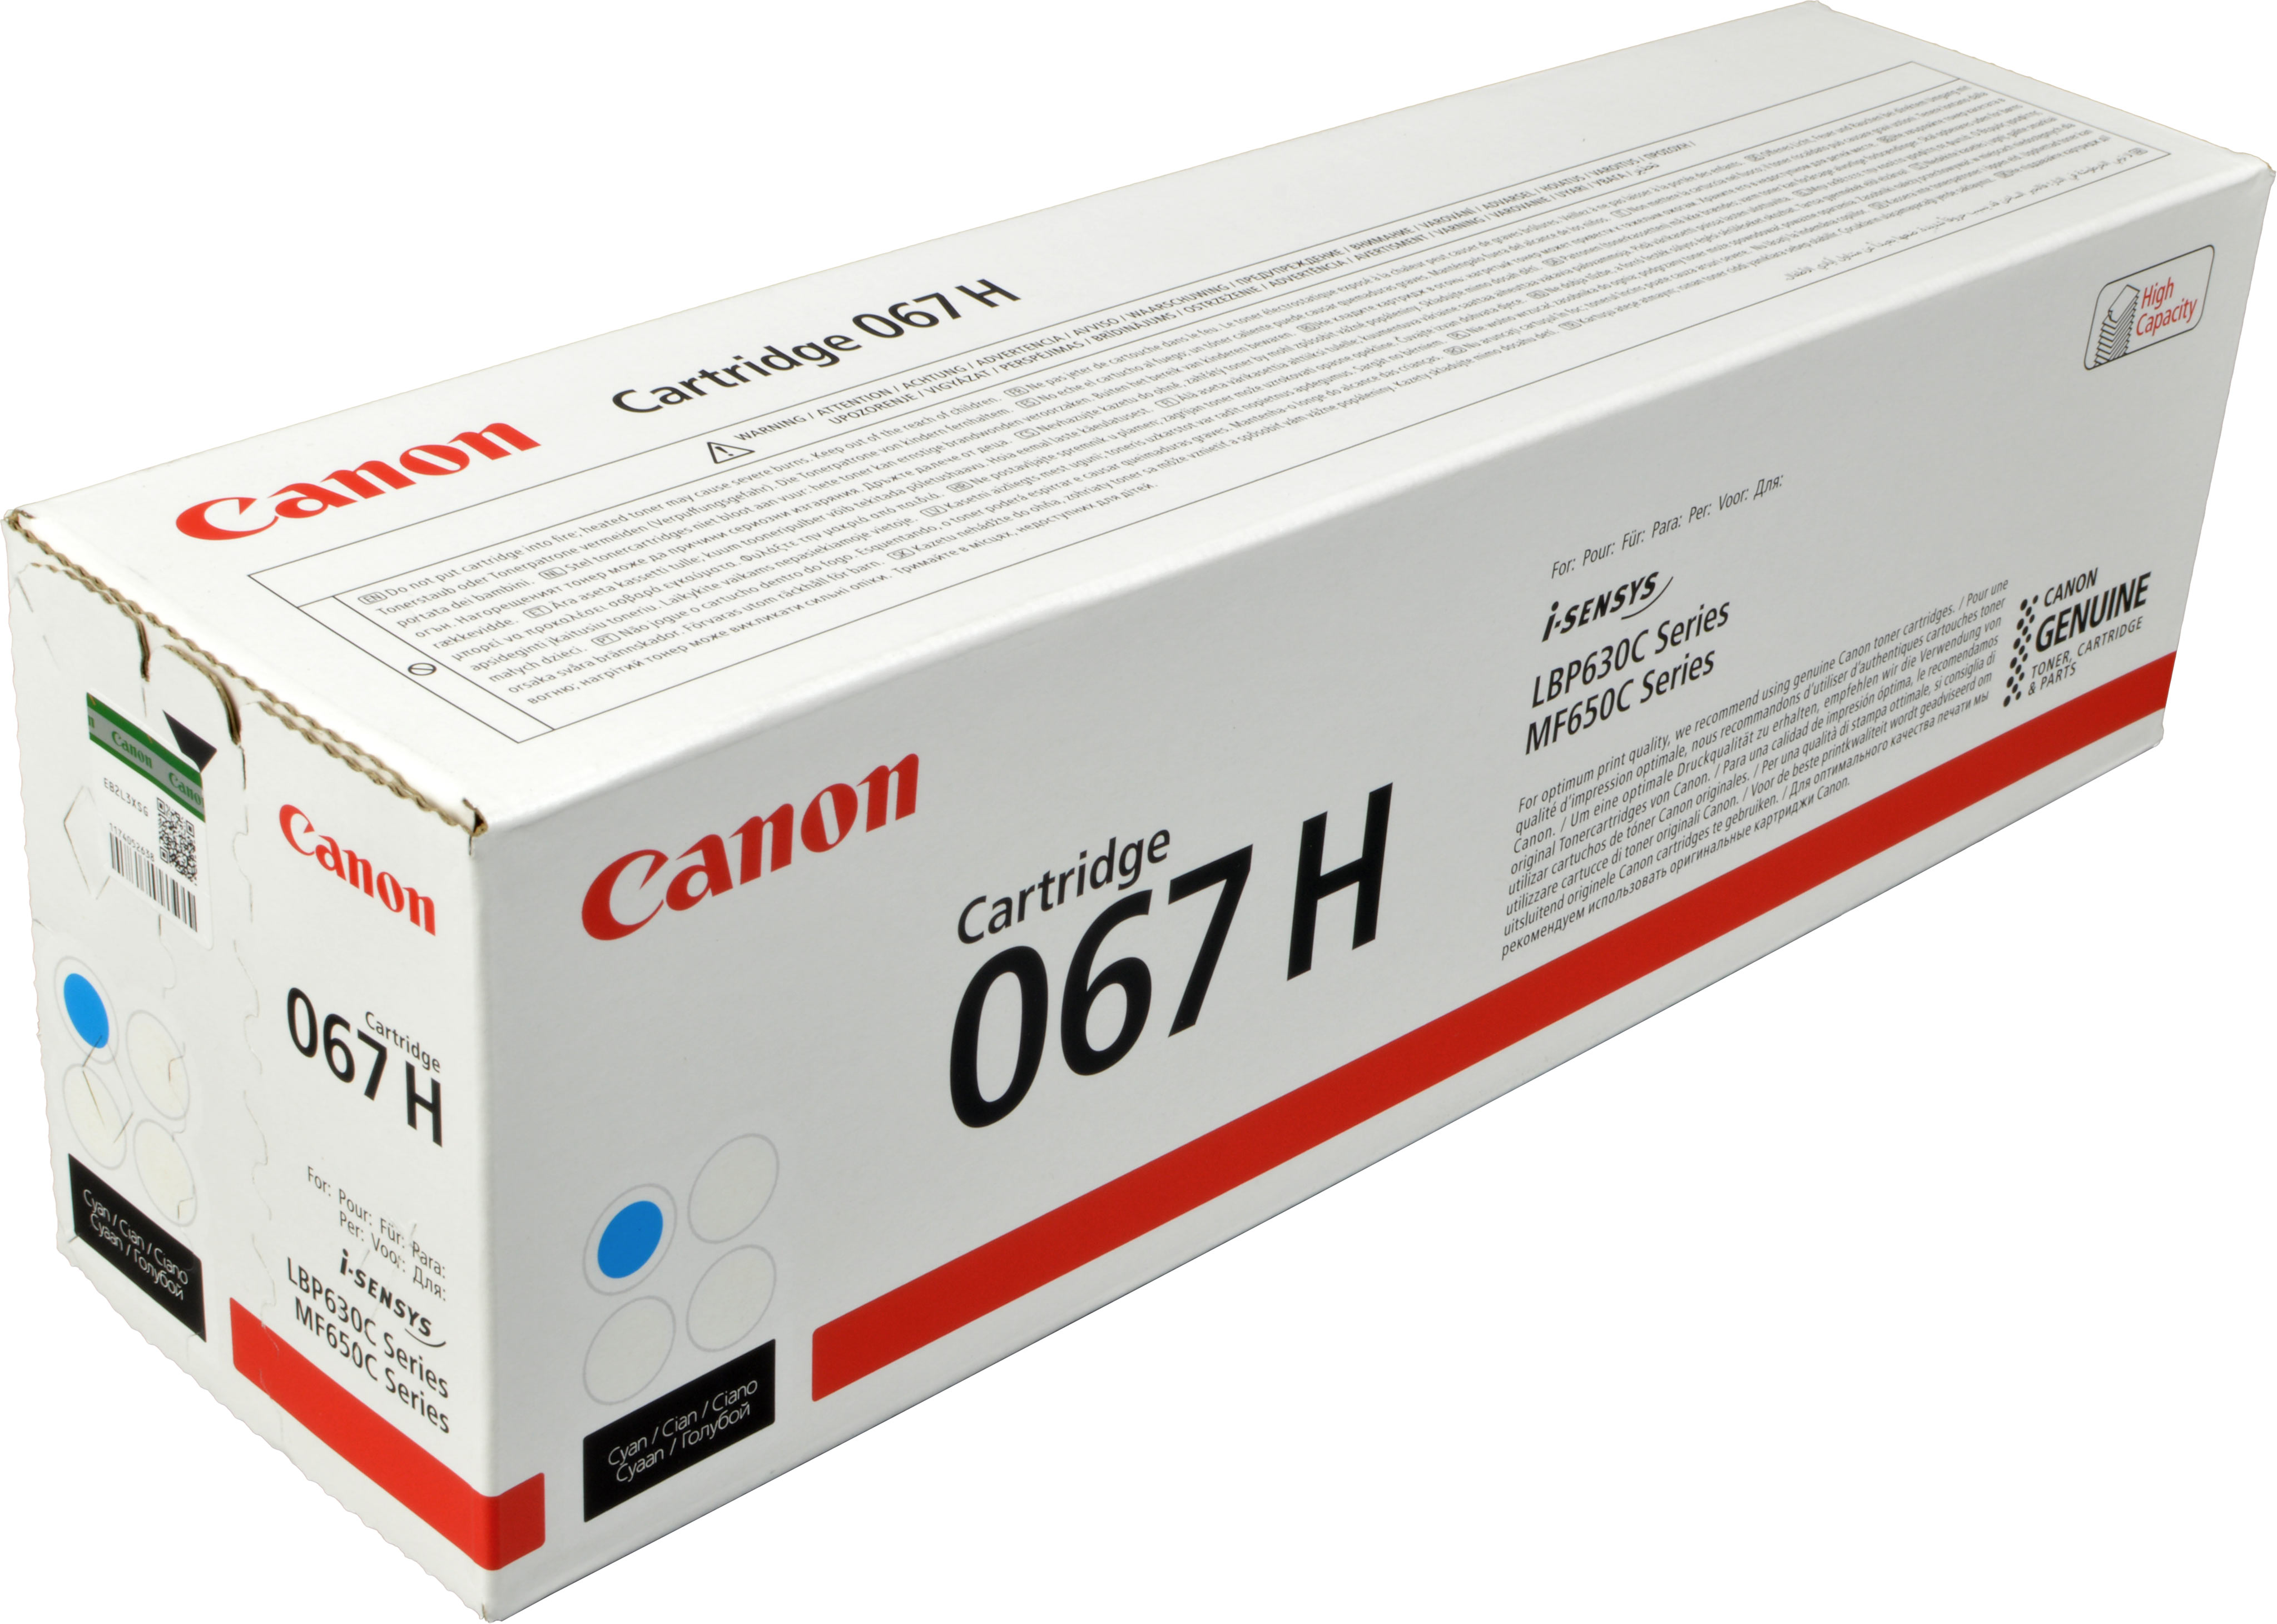 Canon Toner 5105C002  067H  cyan